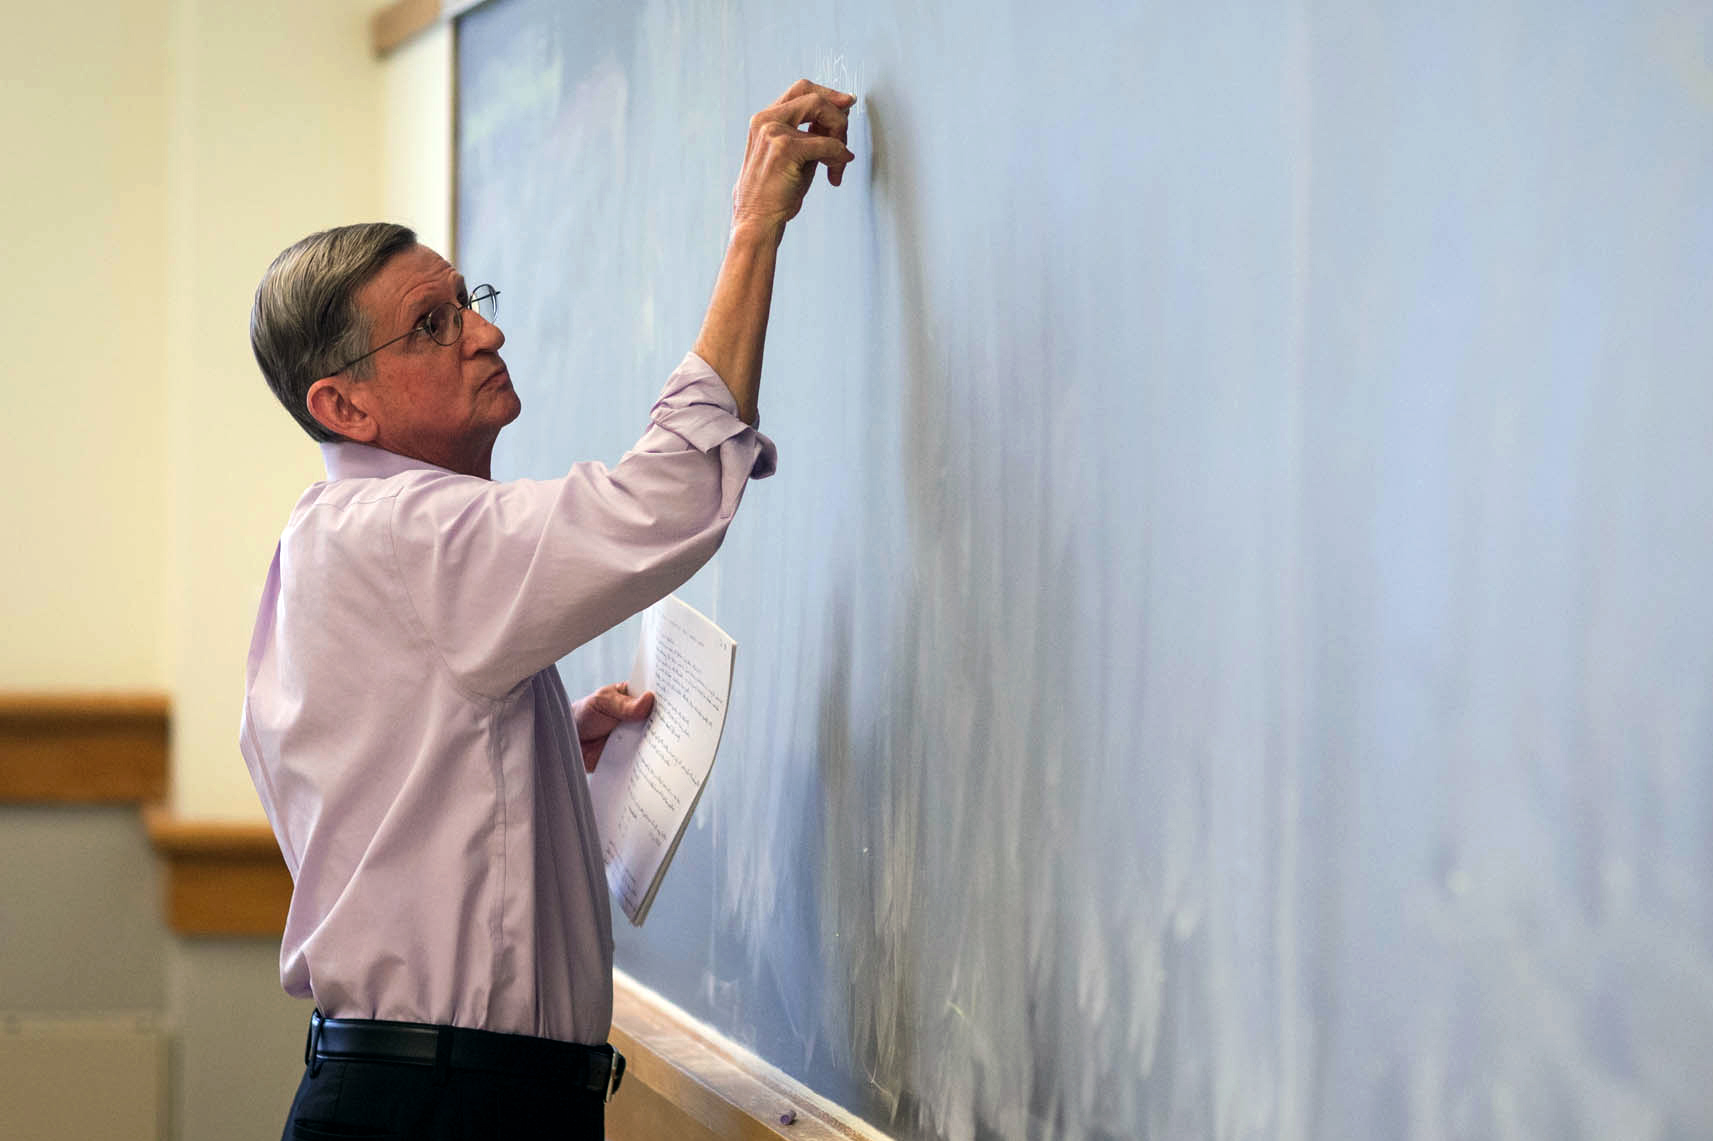 Ed Olsen writing on a chalkboard